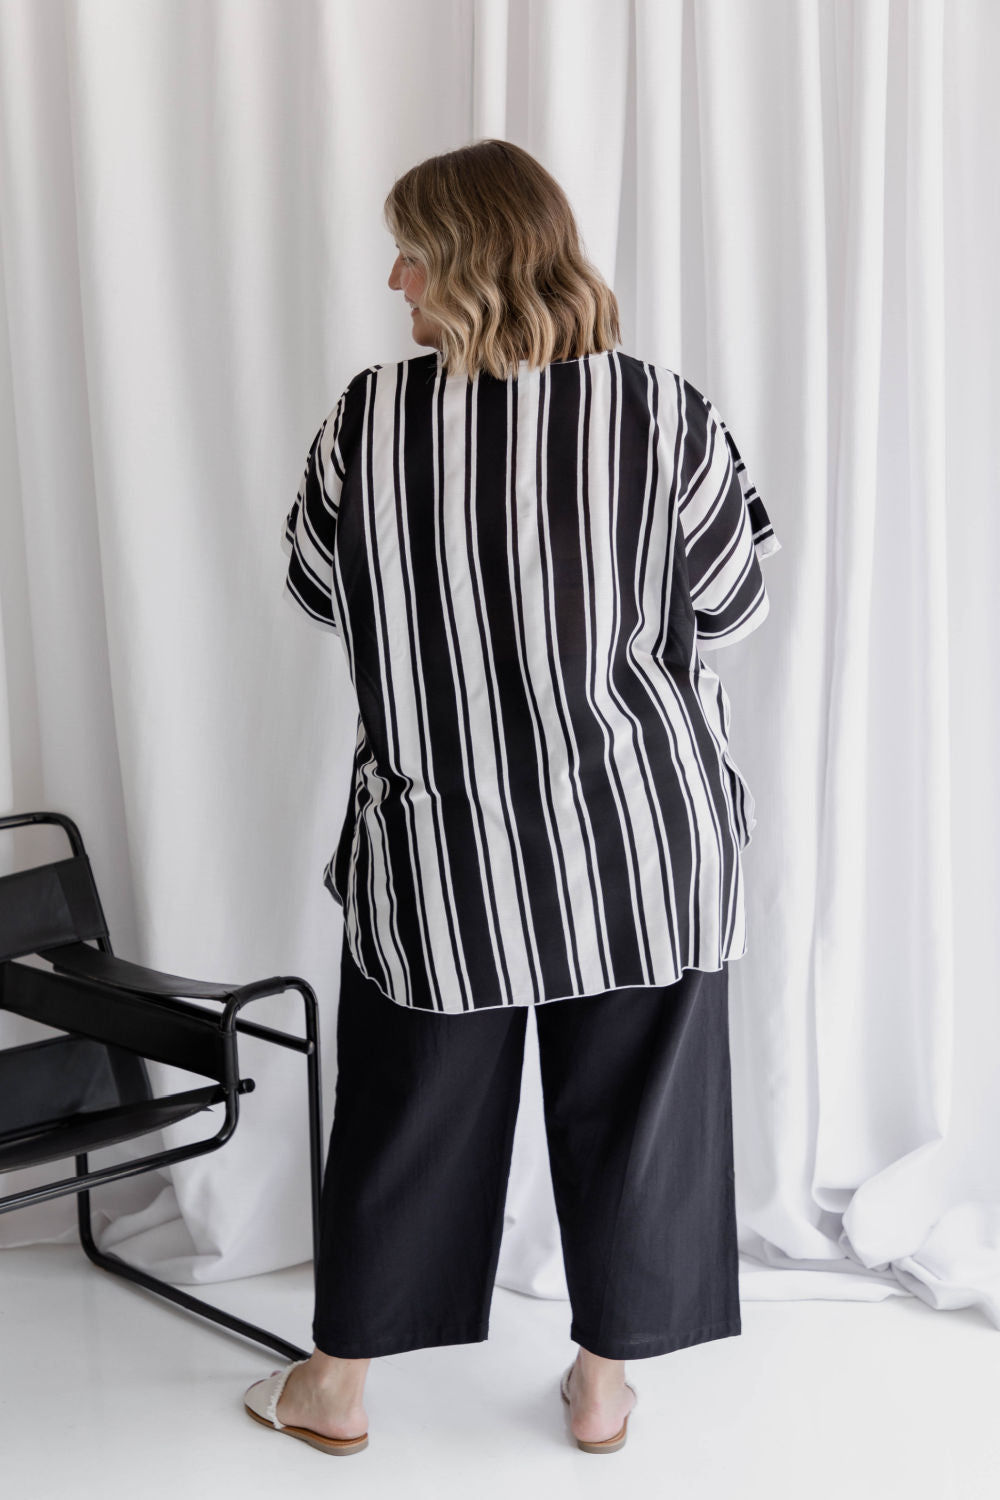  Analyzing image    womens-kaftan-top-black-white-stripe-resort-style-plus-size